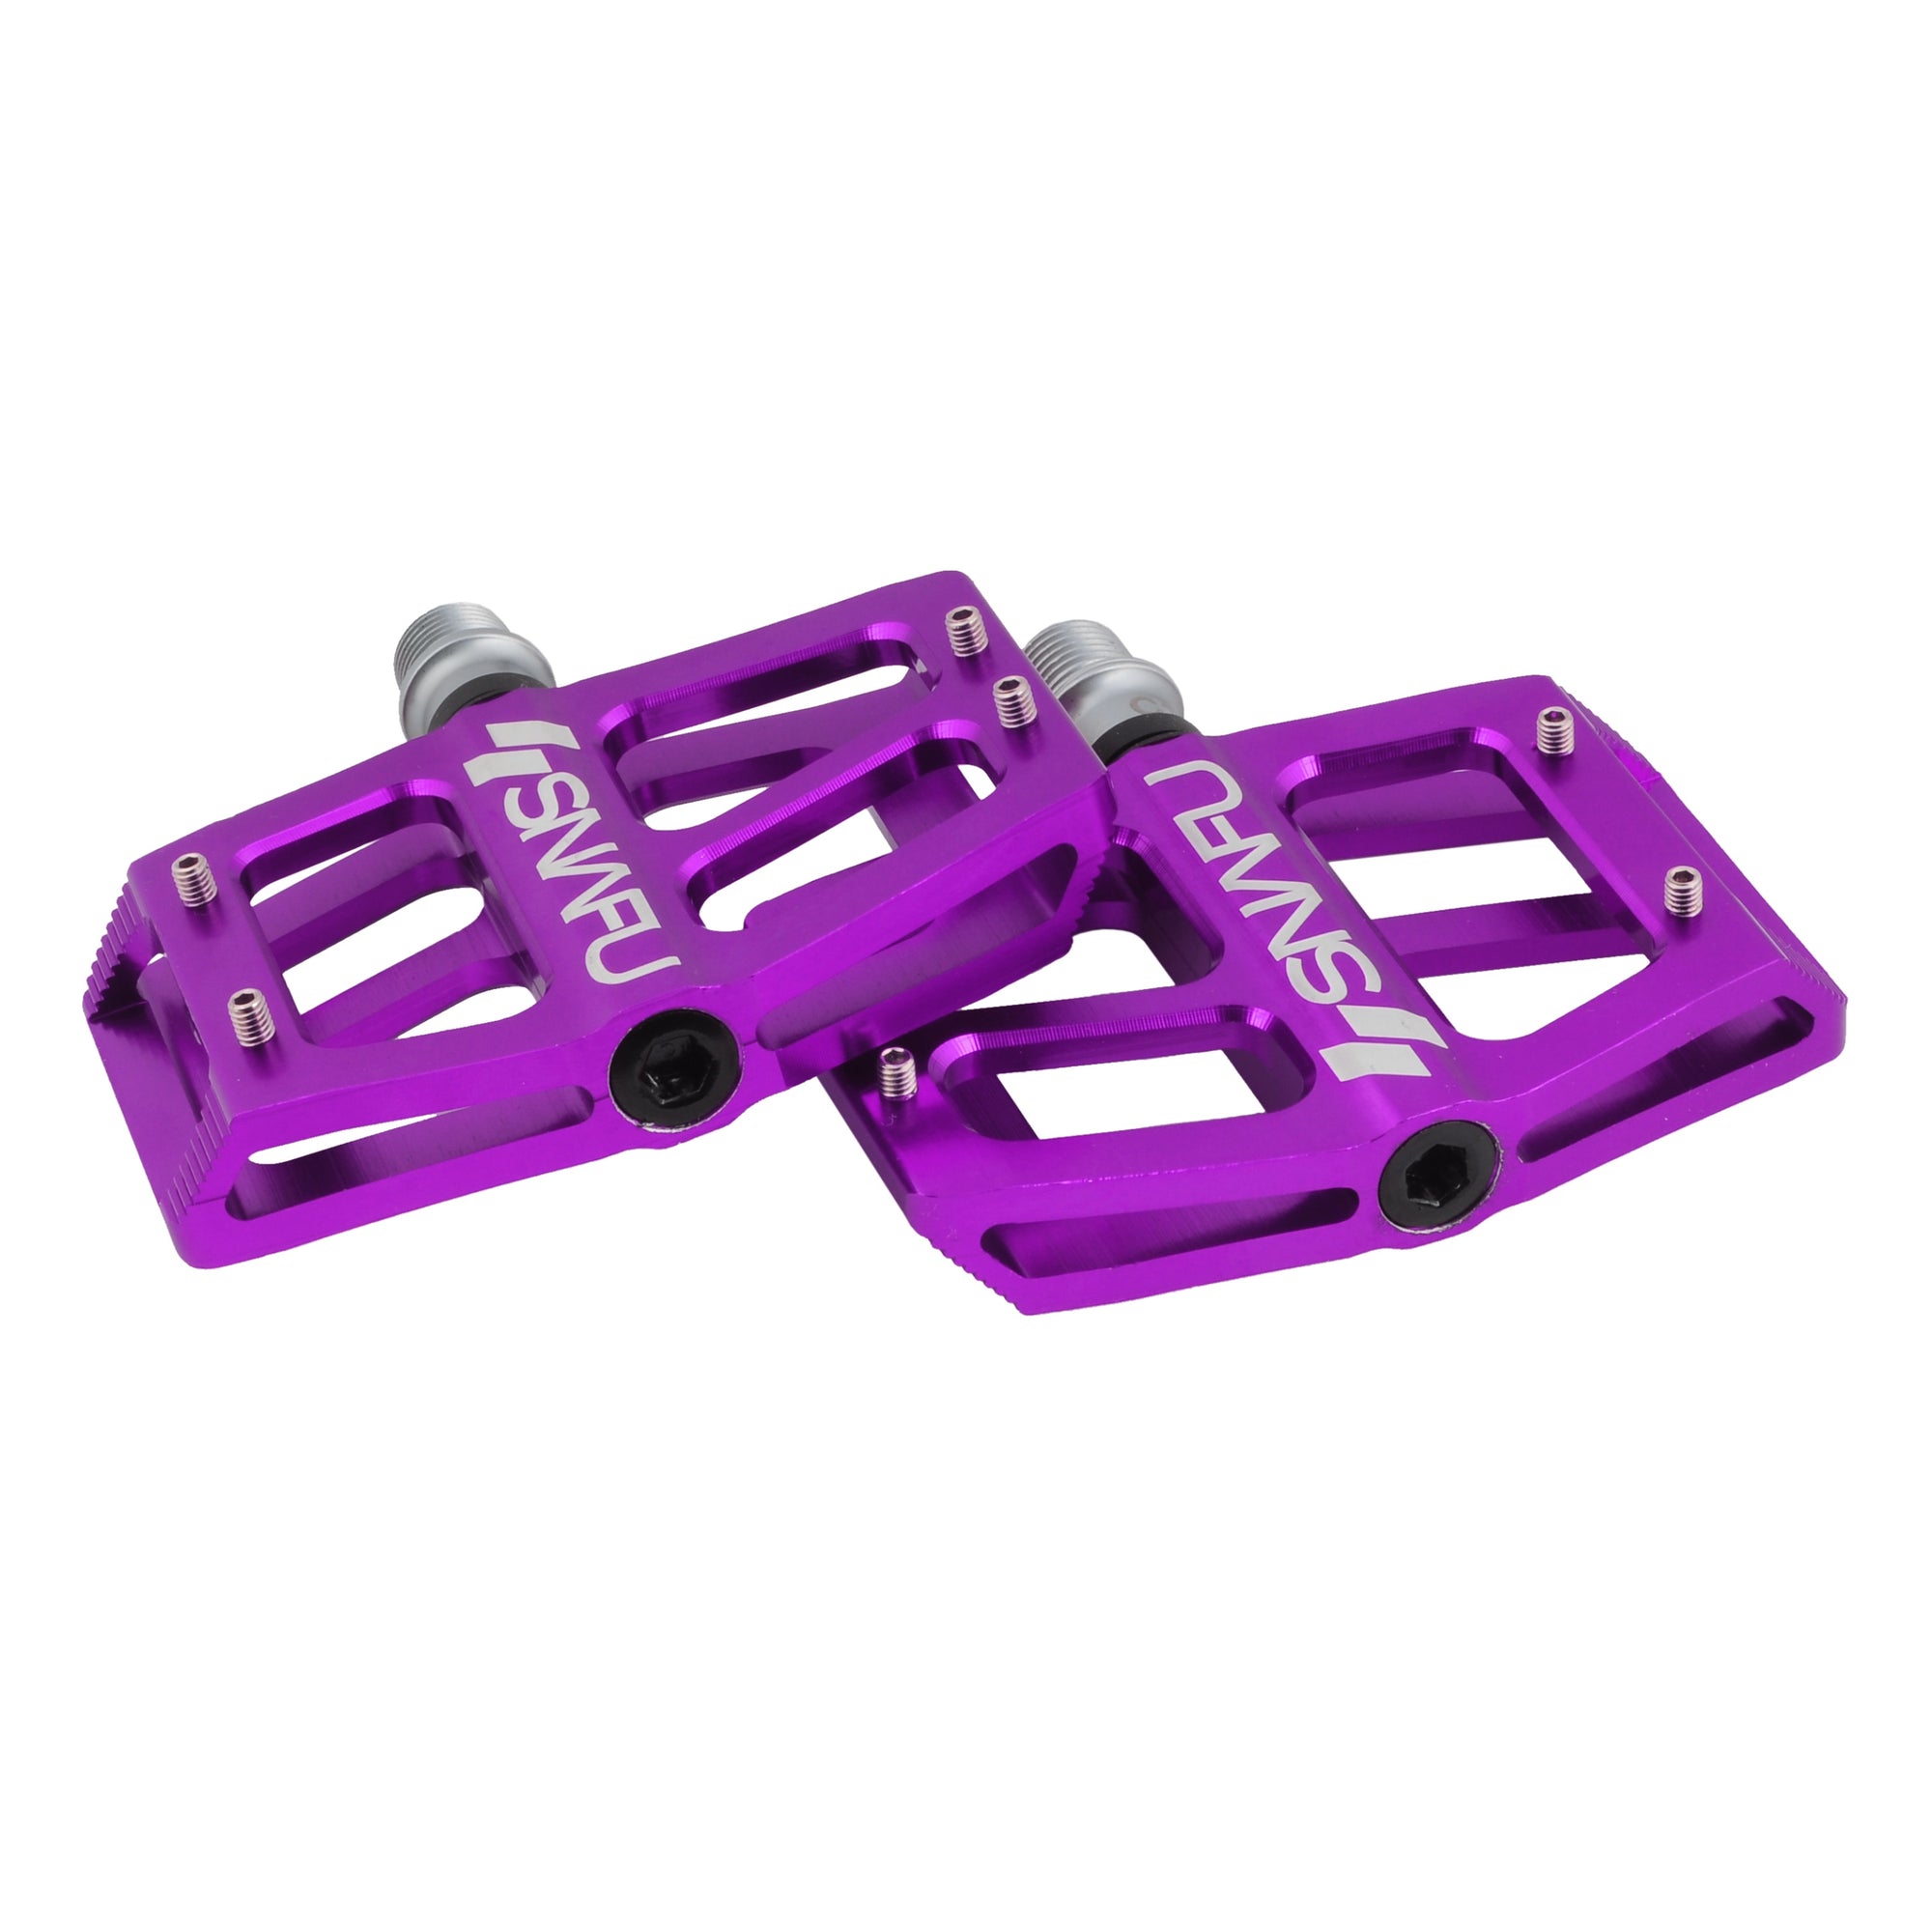 Snafu BMX Cactus Jr Aluminum Platform Pedals - Sealed - 9/16 - Purple